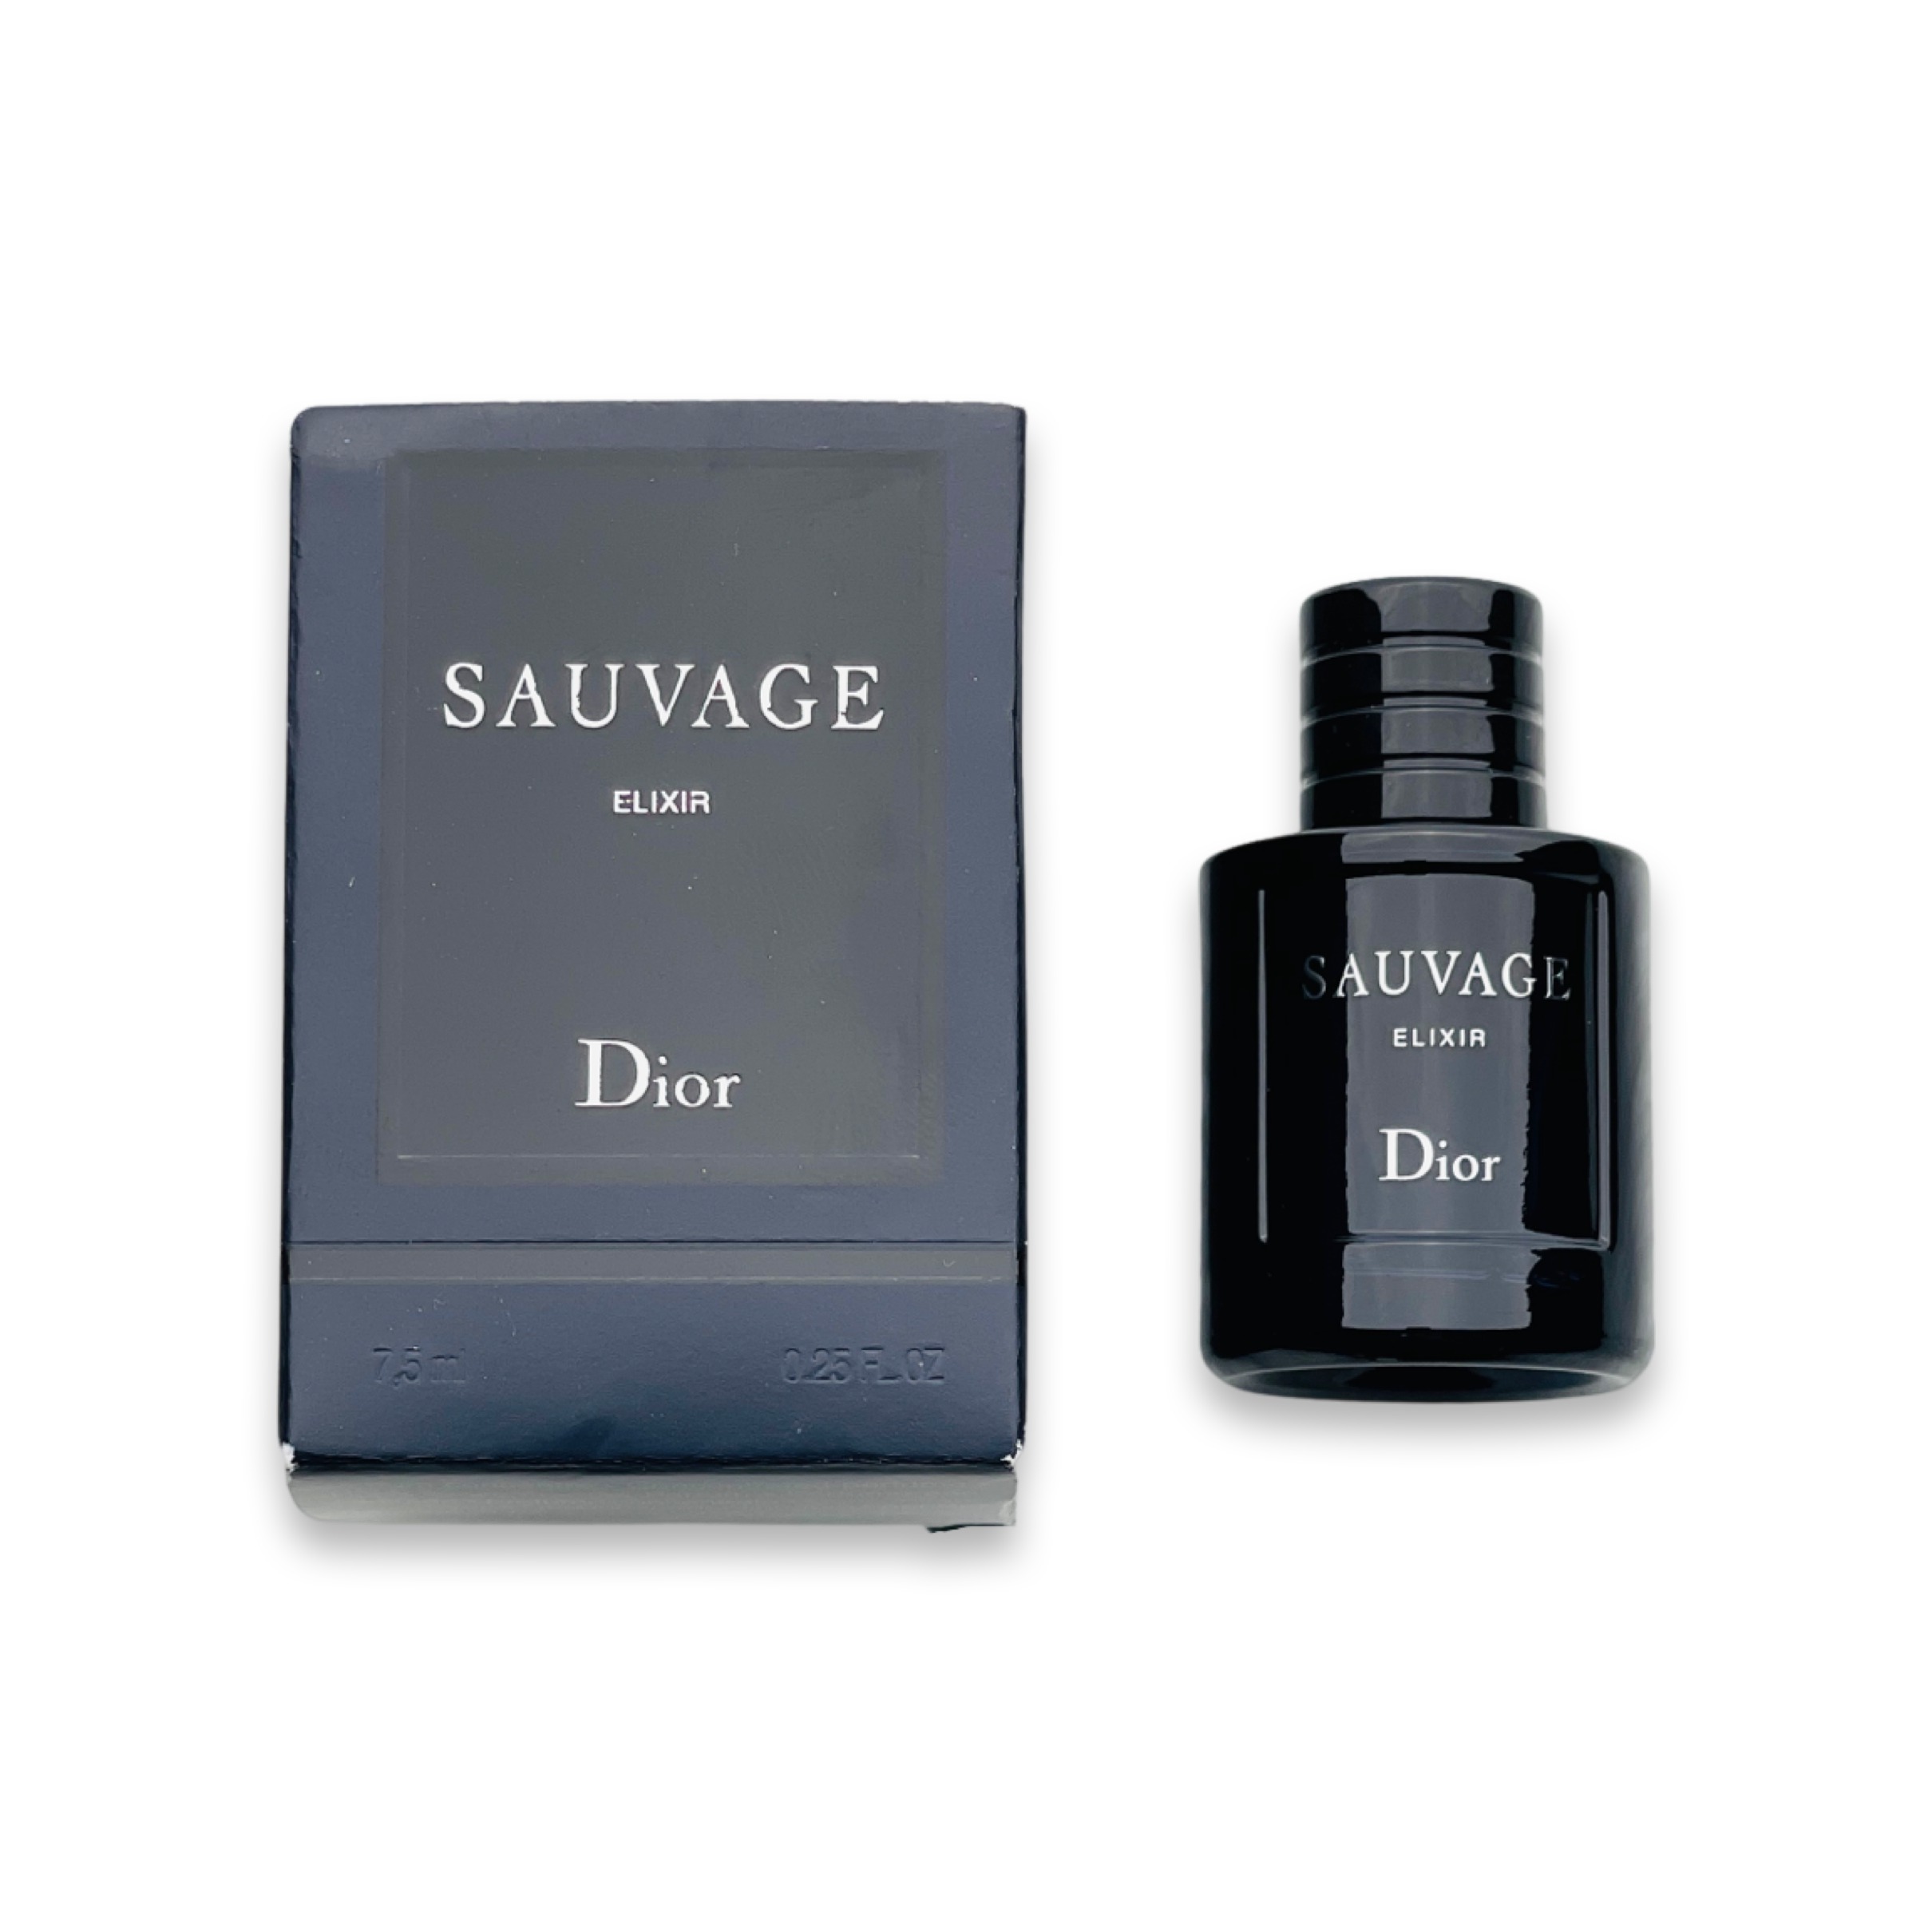 Dior Sauvage Elixir / Travel Size (7.5ml)